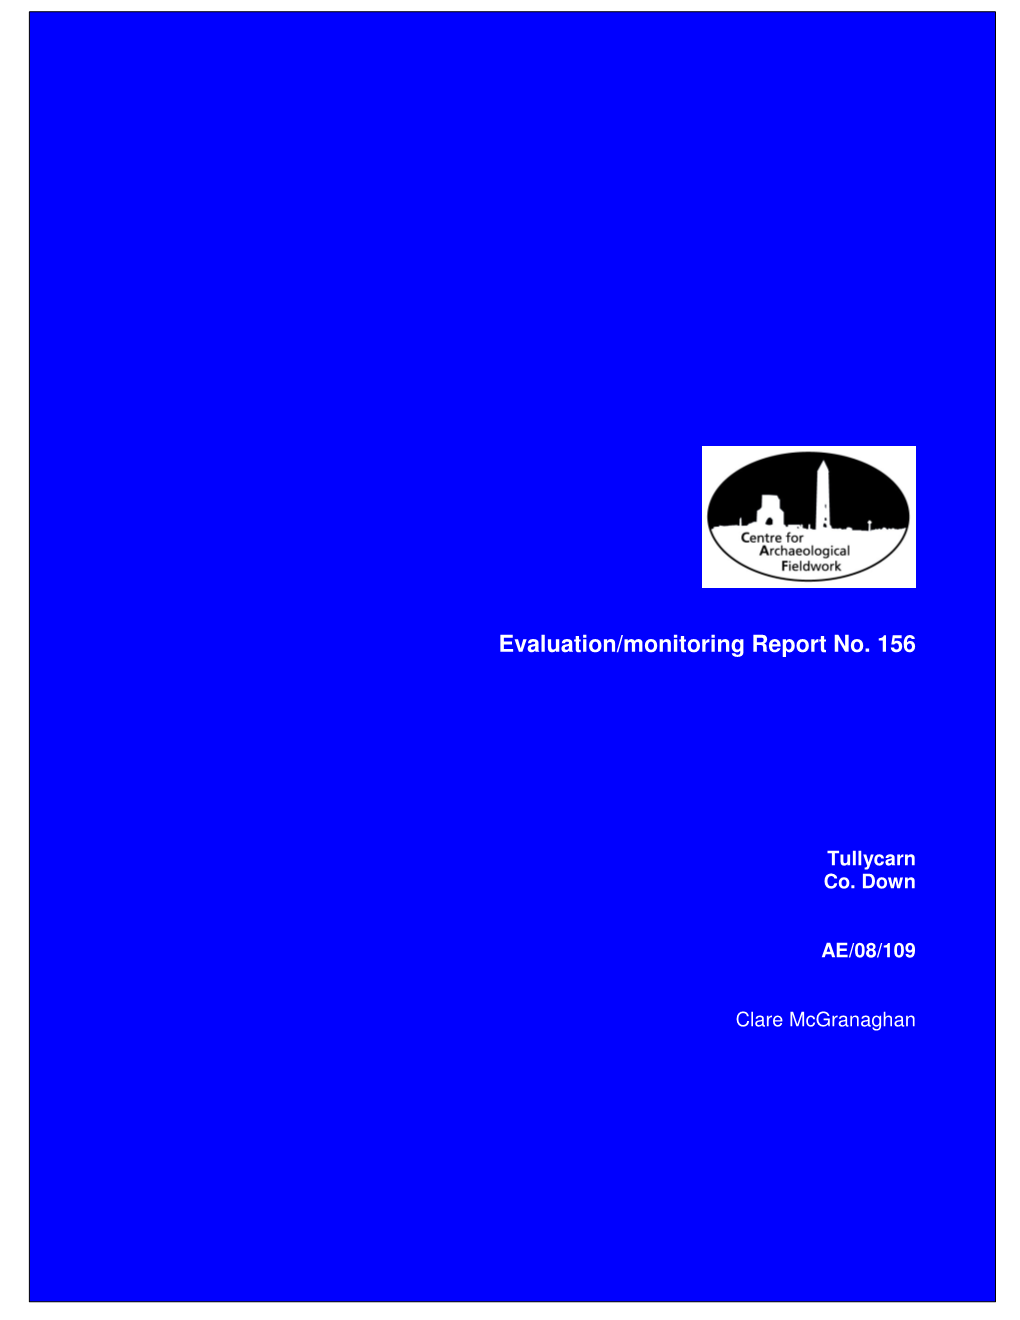 Evaluation/Monitoring Report No. 156